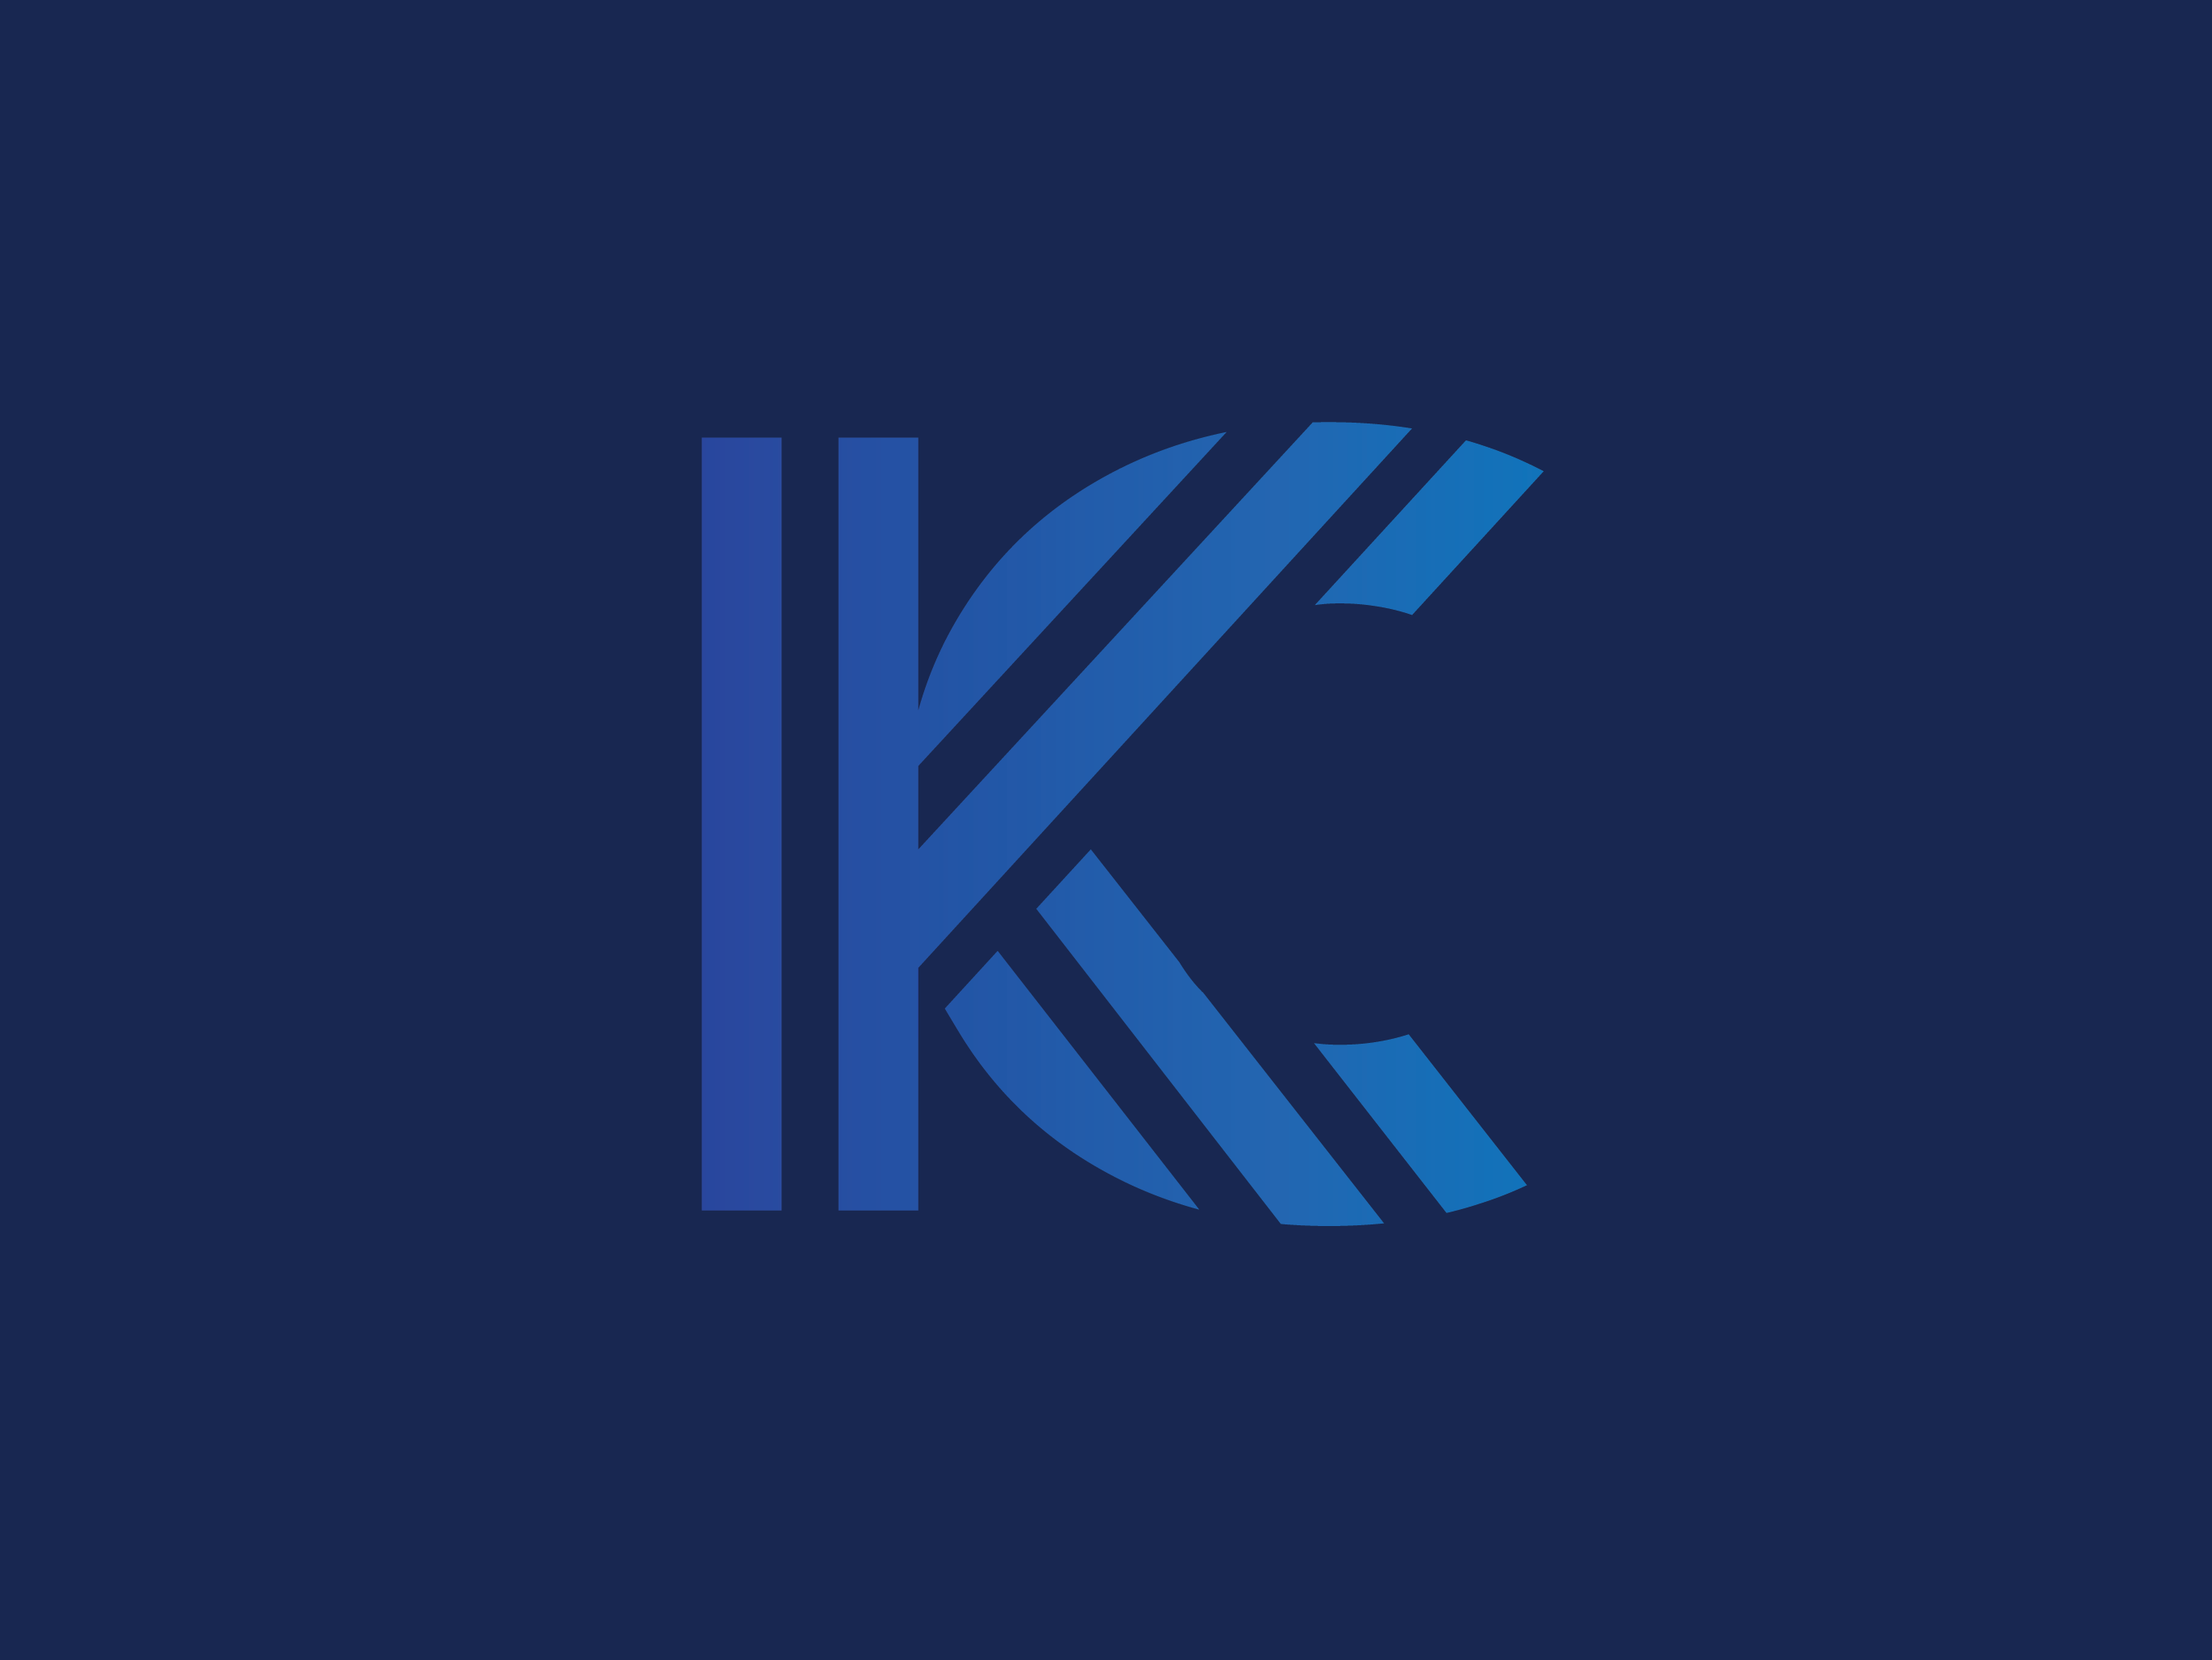 K c kc. Логотип Kc. Логотип с буквами KS. КЦ Монограмма. Логотип с буквой КК.